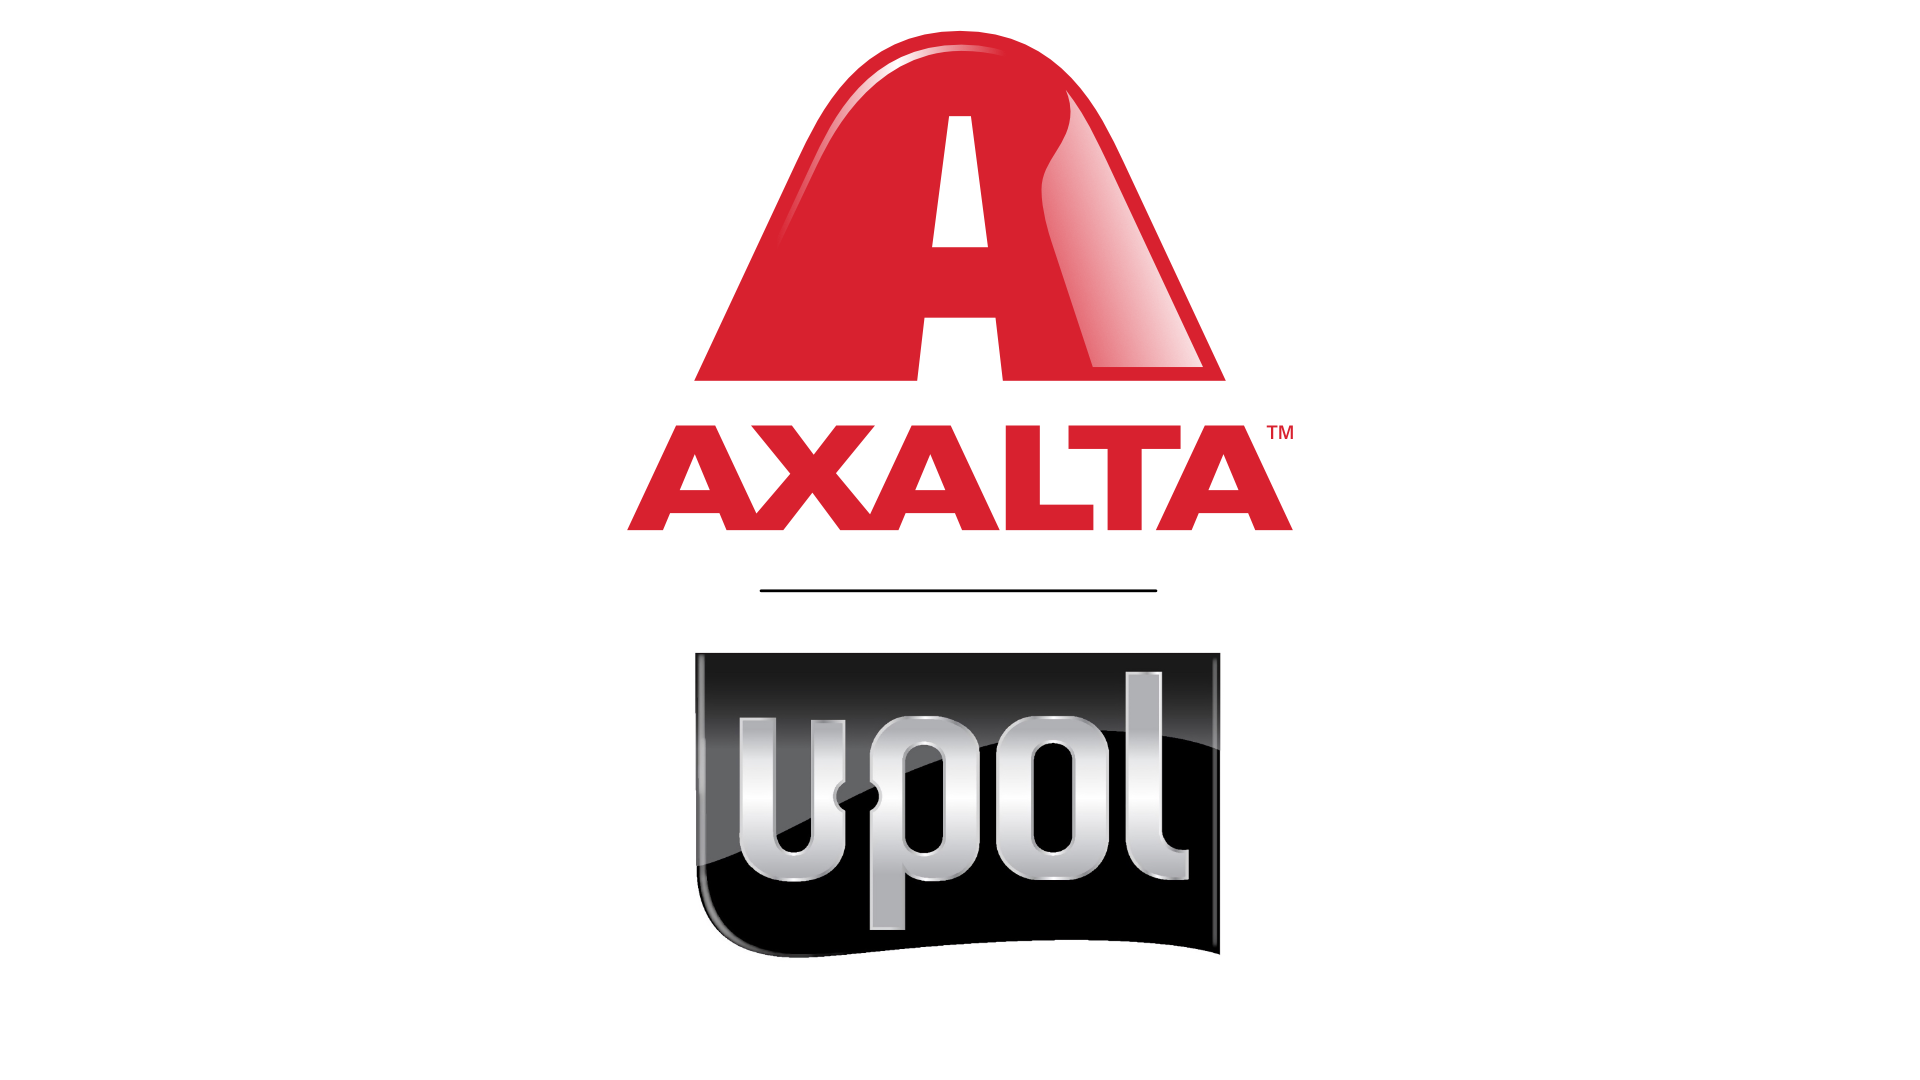 Axalta Announces Acquisition Of U-POL